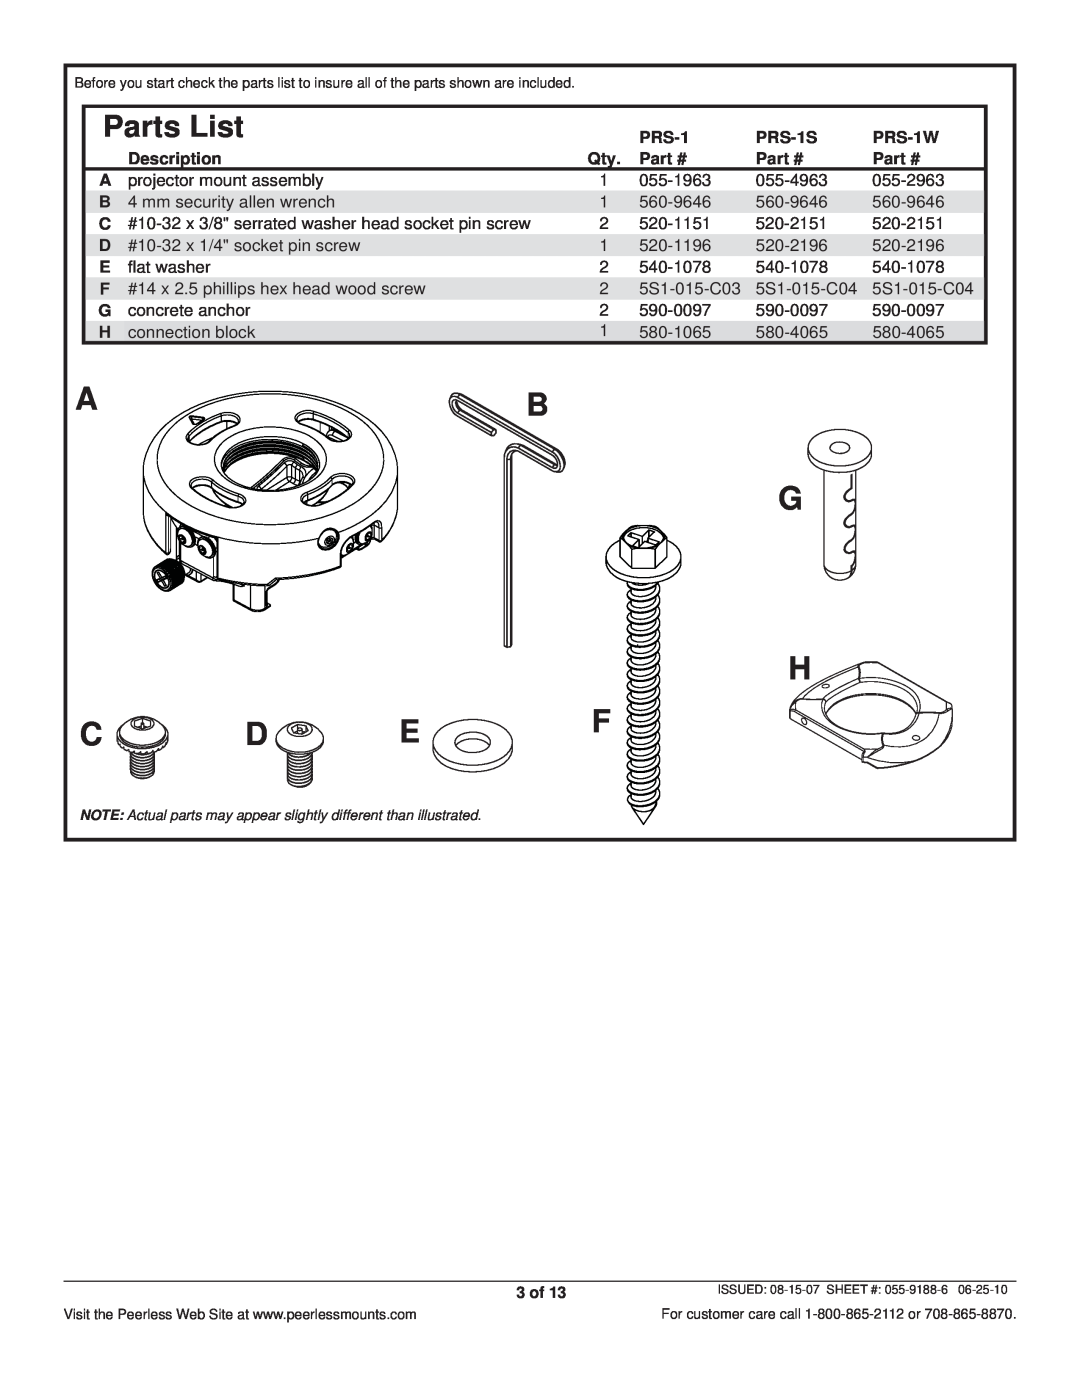 Peerless Industries PRS-1S manual Parts List, PRS-1W, Description, 3 of 